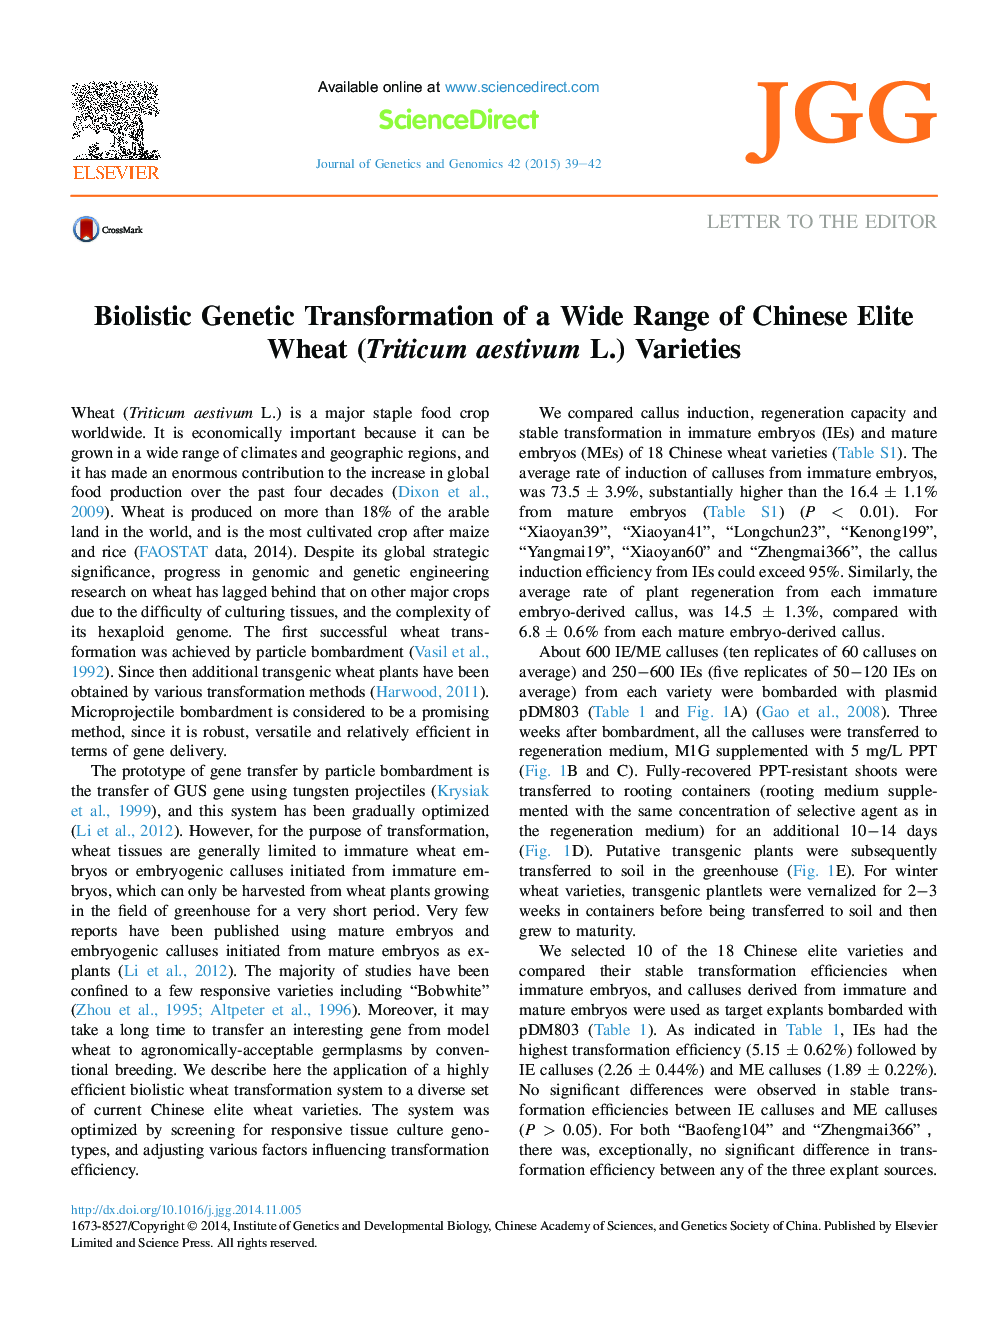 Biolistic Genetic Transformation of a Wide Range of Chinese Elite Wheat (Triticum aestivum L.) Varieties